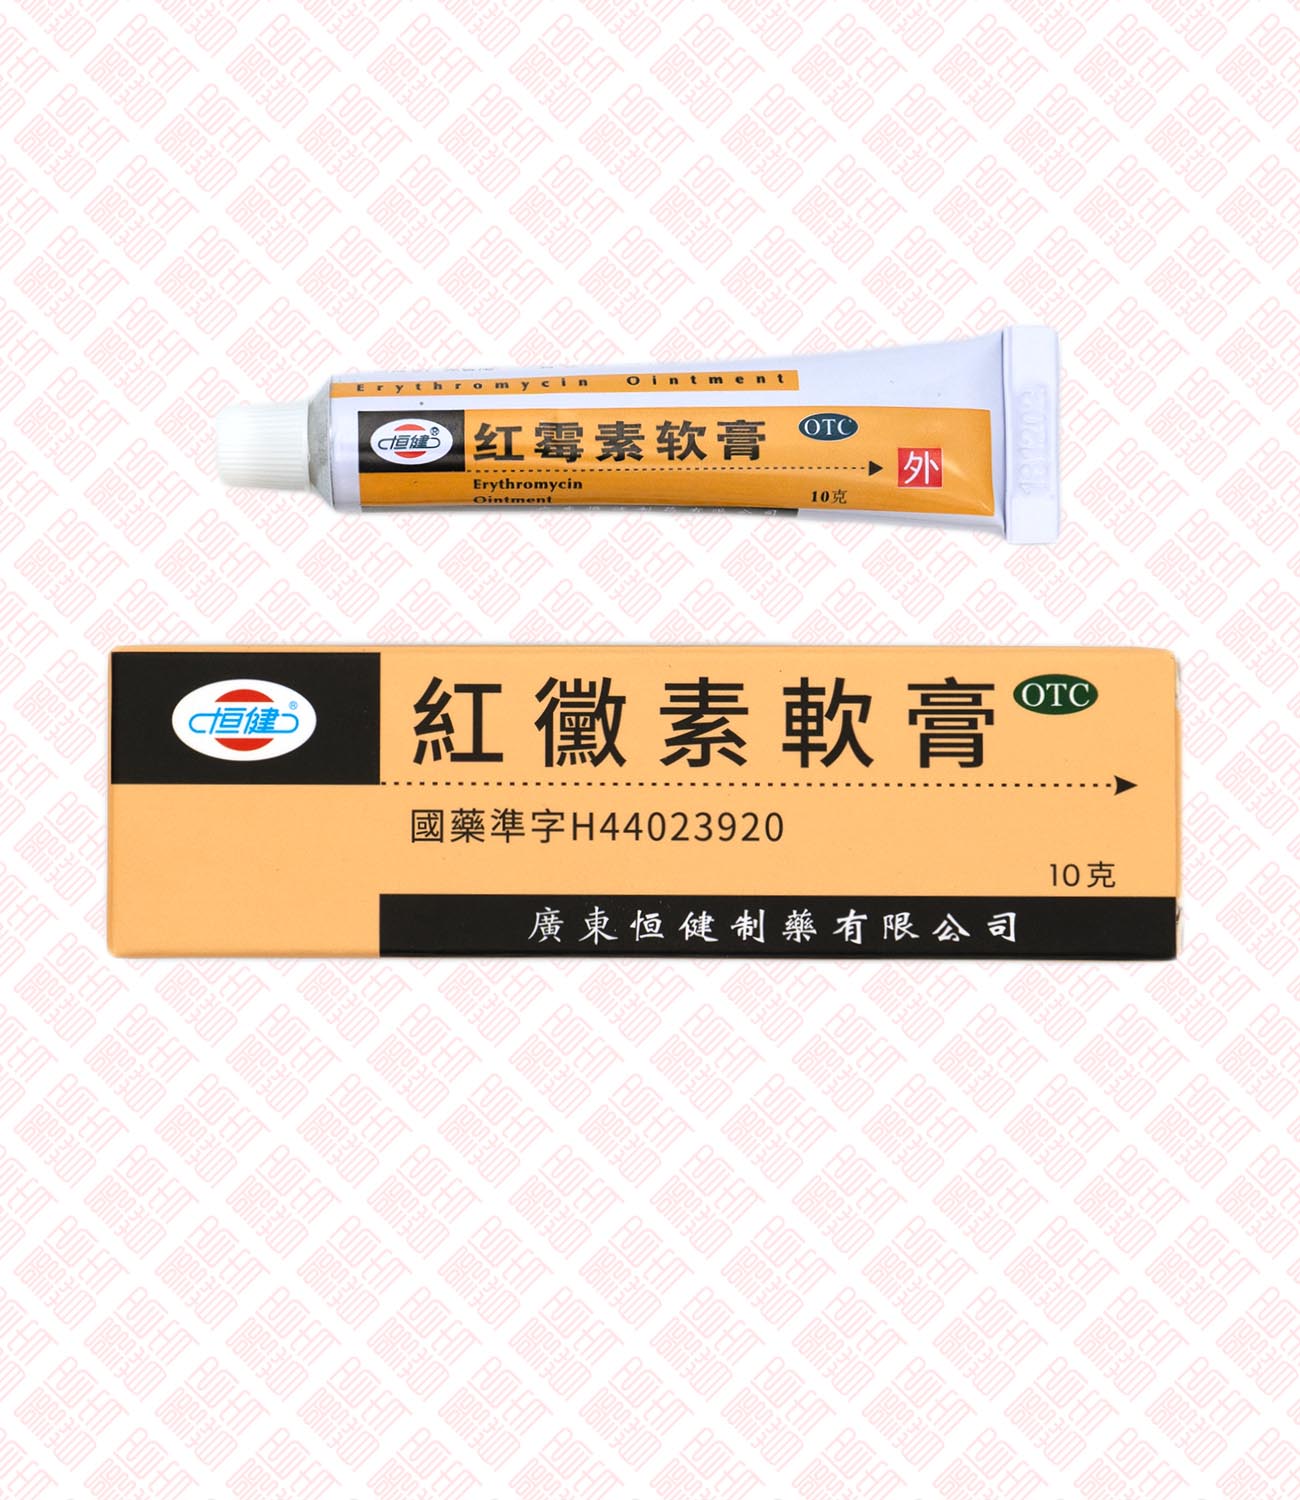 Hongmeisu Ruangao 红霉素软膏 UPC 6920190330210 Indochina Ginseng 印支参茸